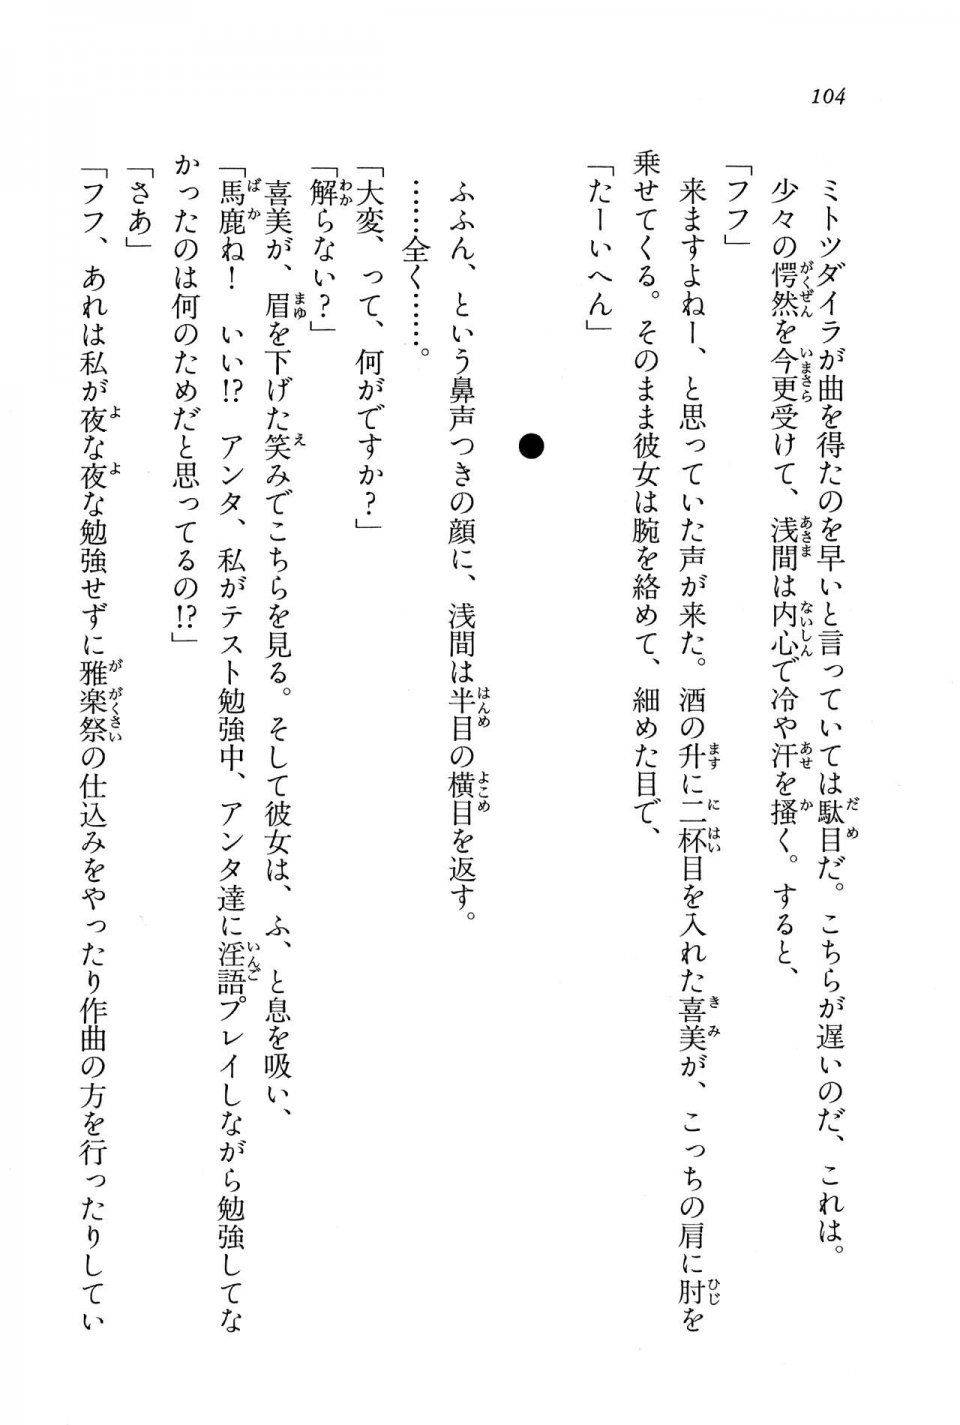 Kyoukai Senjou no Horizon BD Special Mininovel Vol 7(4A) - Photo #108